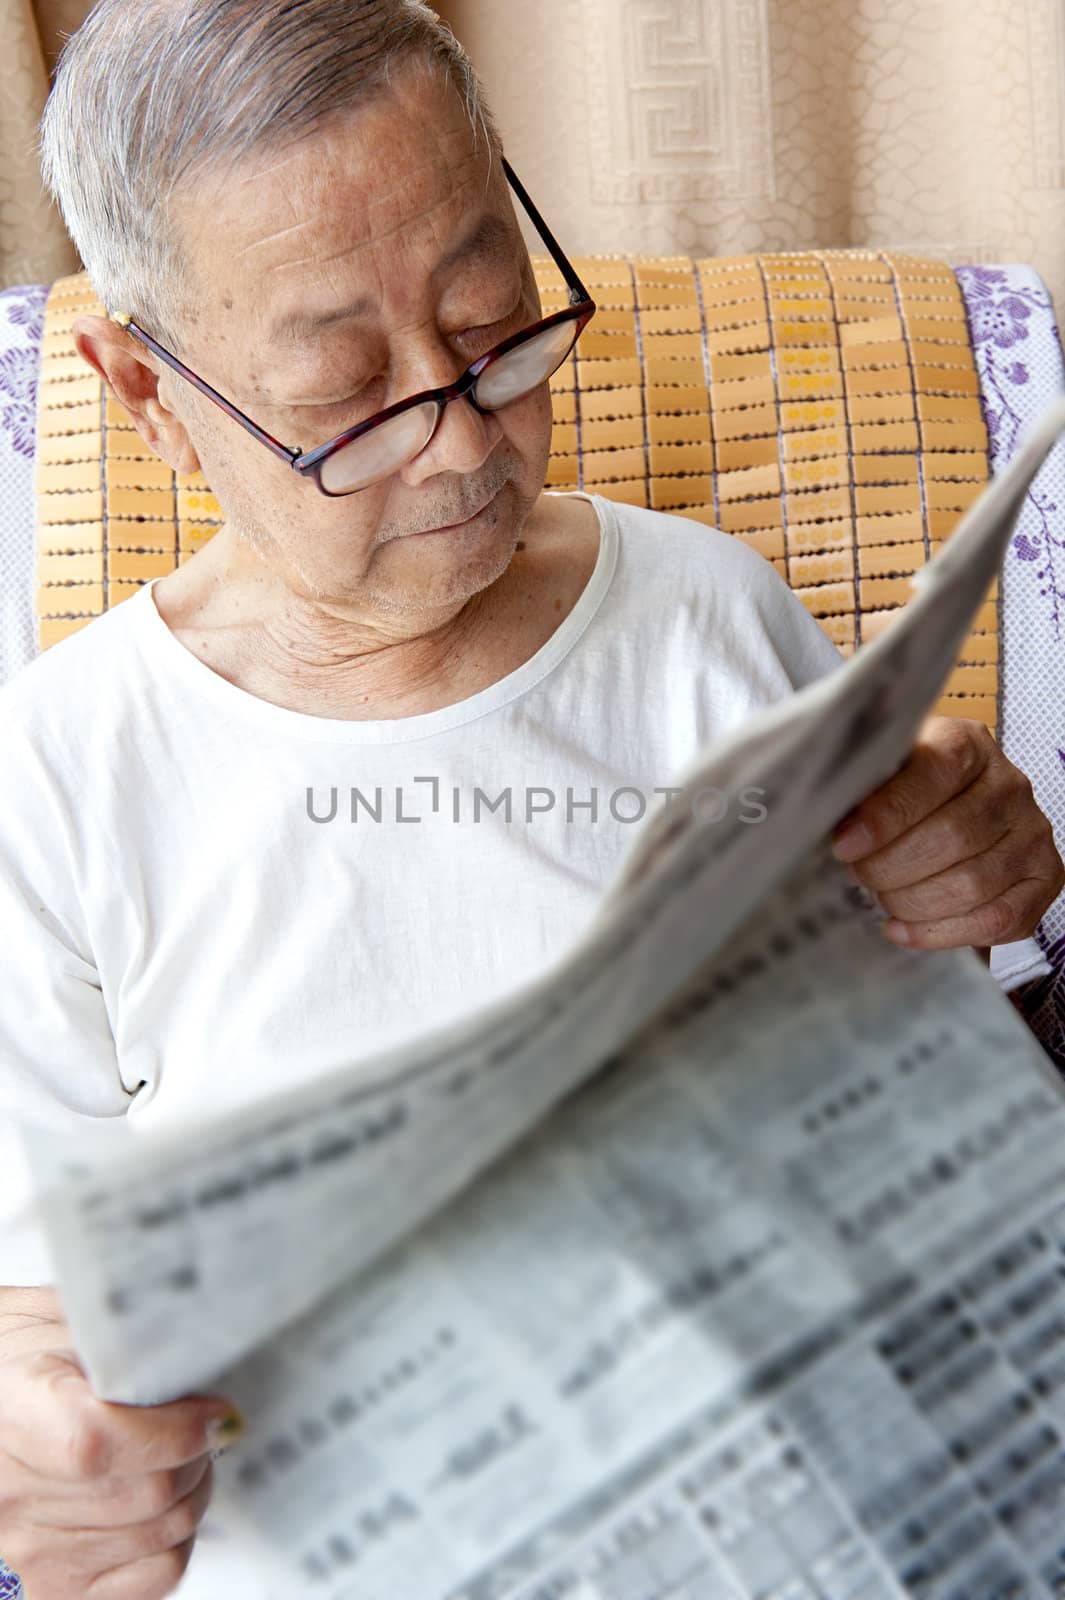 a senior man is reading newspaper